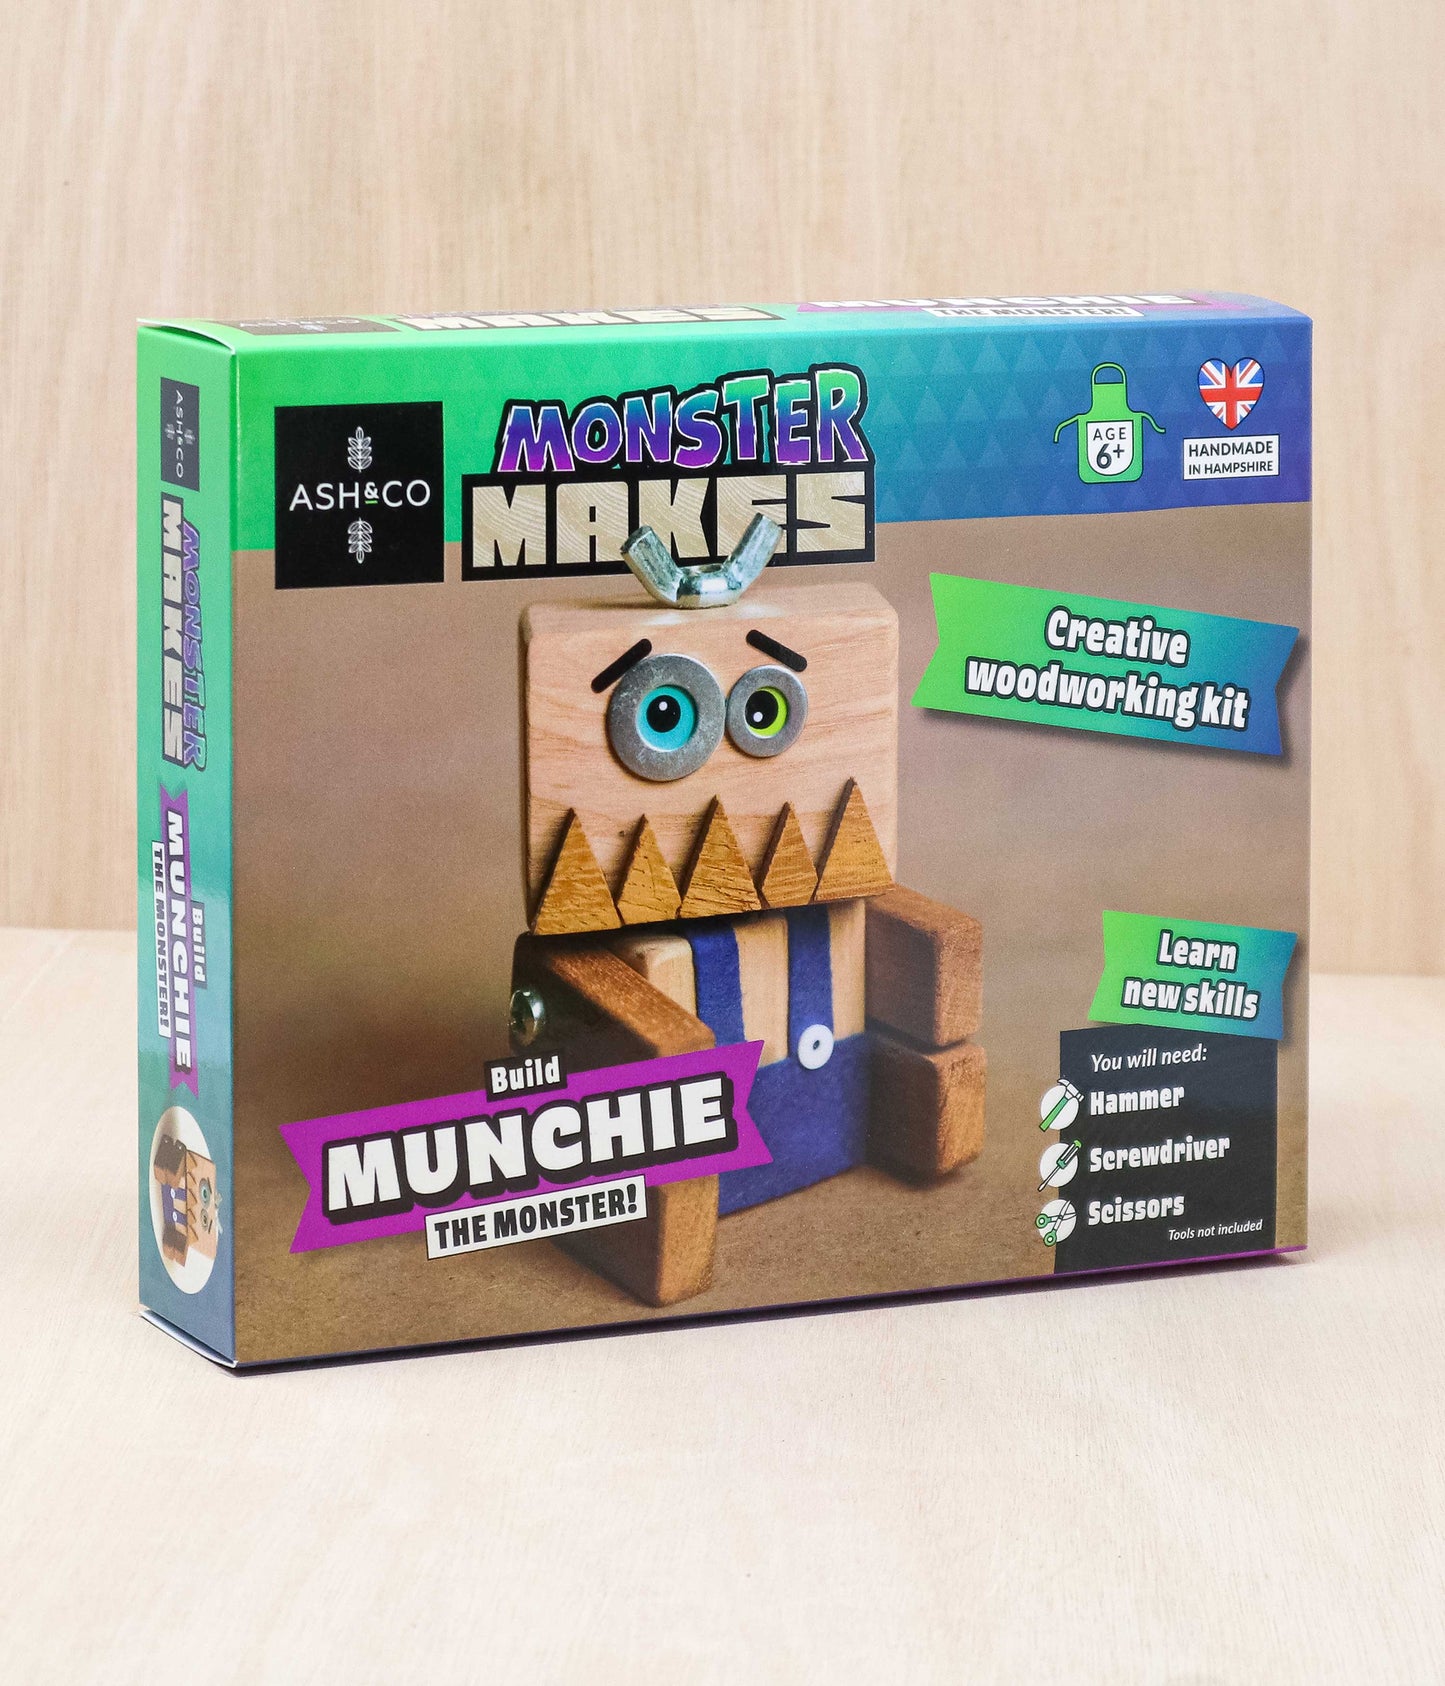 Build Munchie the Monster